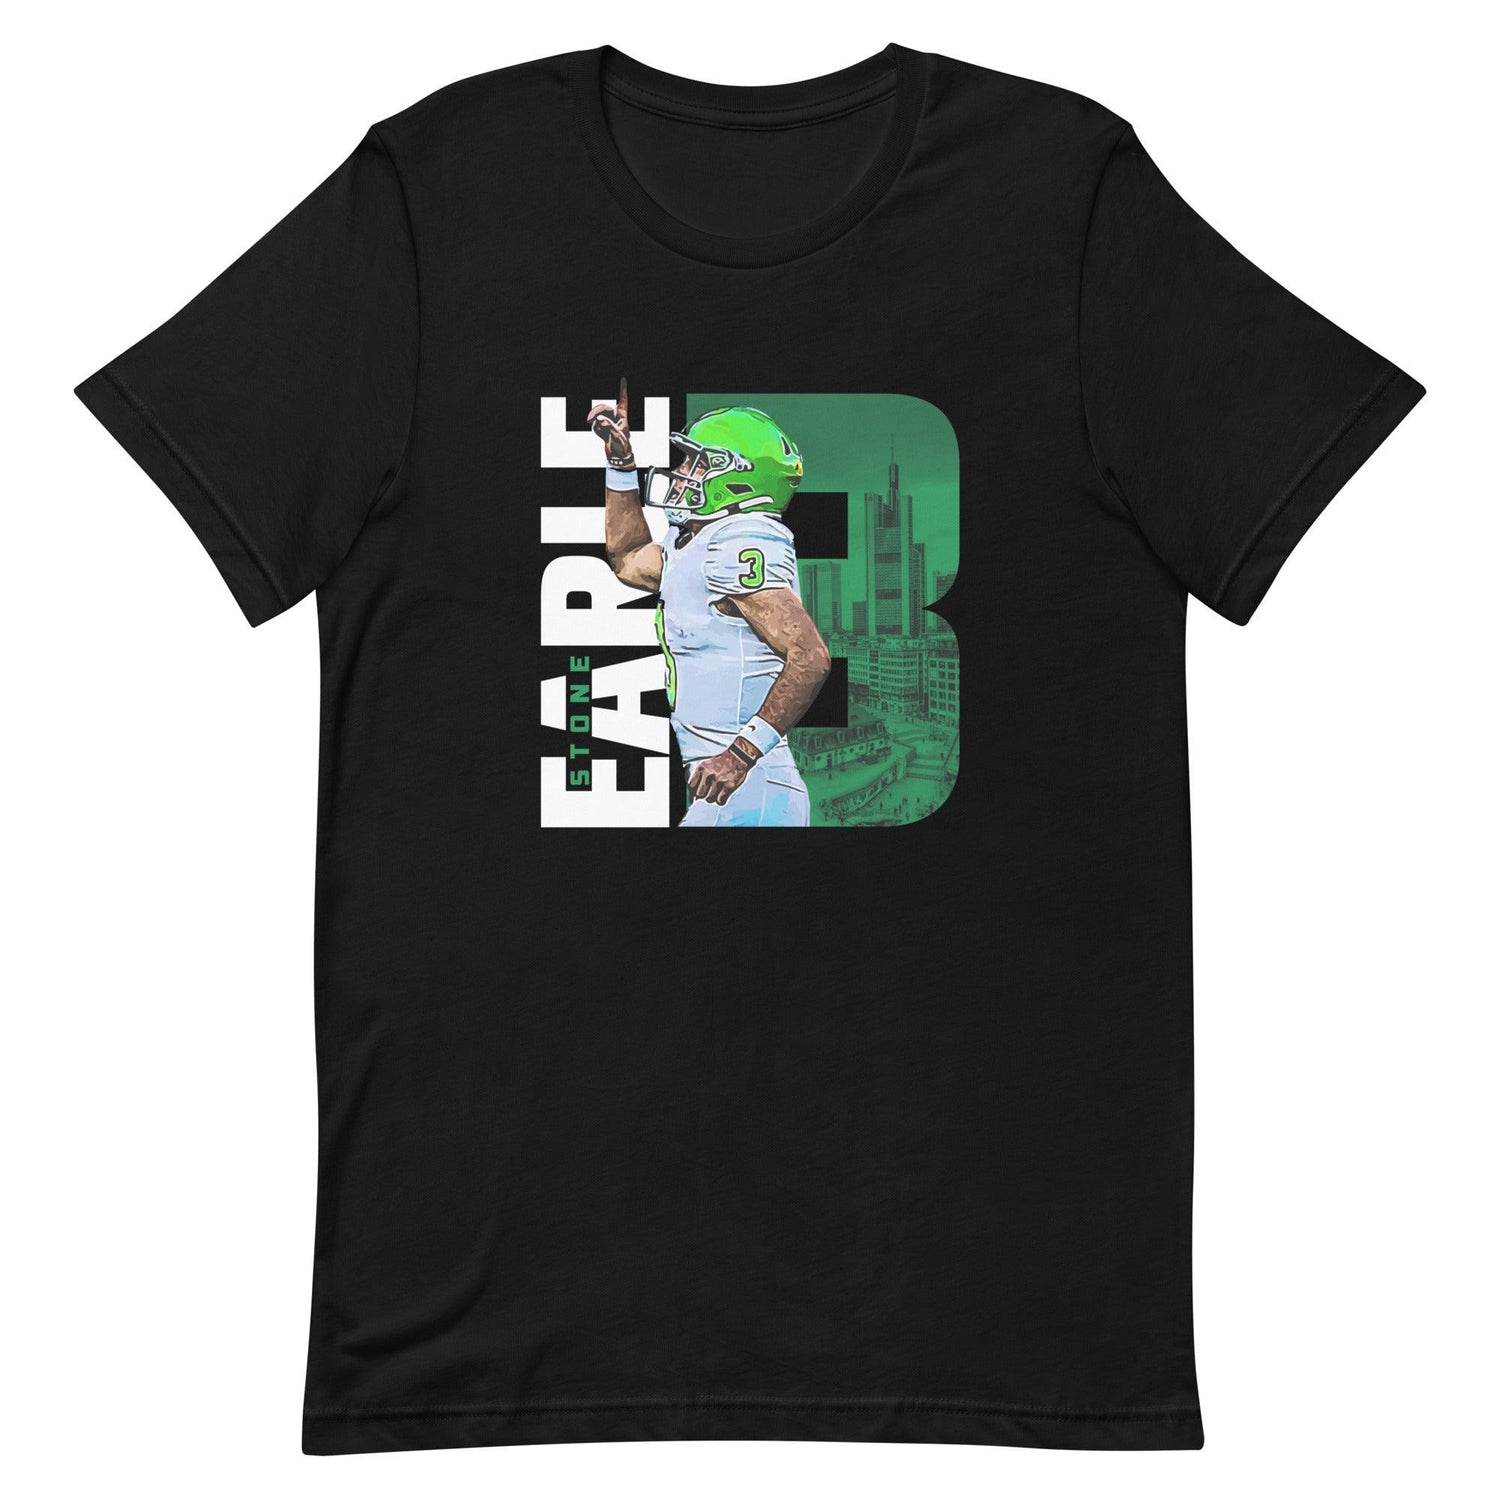 Stone Earle "Gameday" t-shirt - Fan Arch